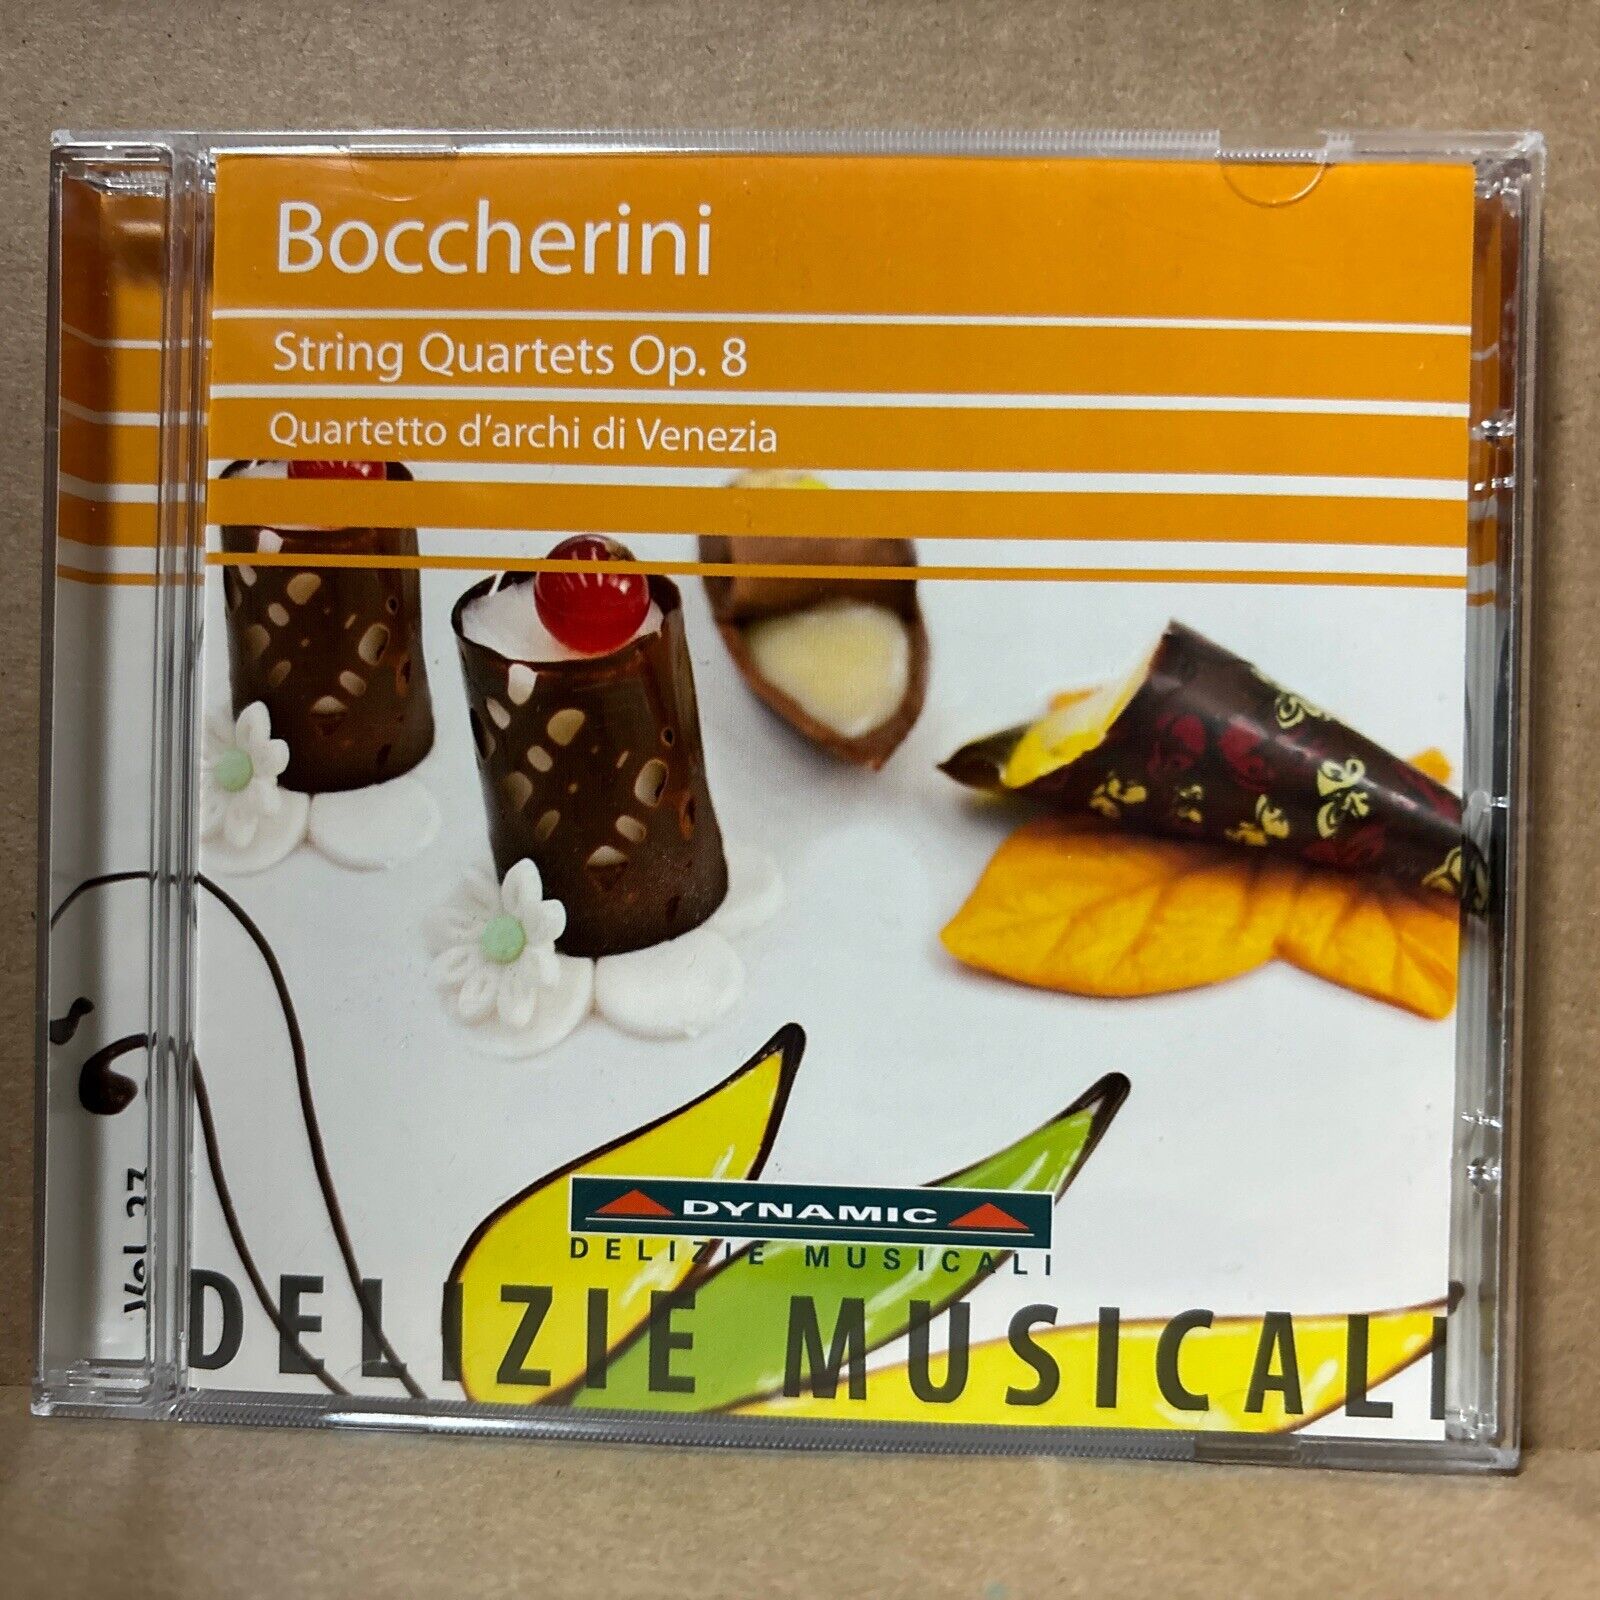 Boccherini: String Quartets Op. 8-Quartetto d’archi di Venezia, Dynamic